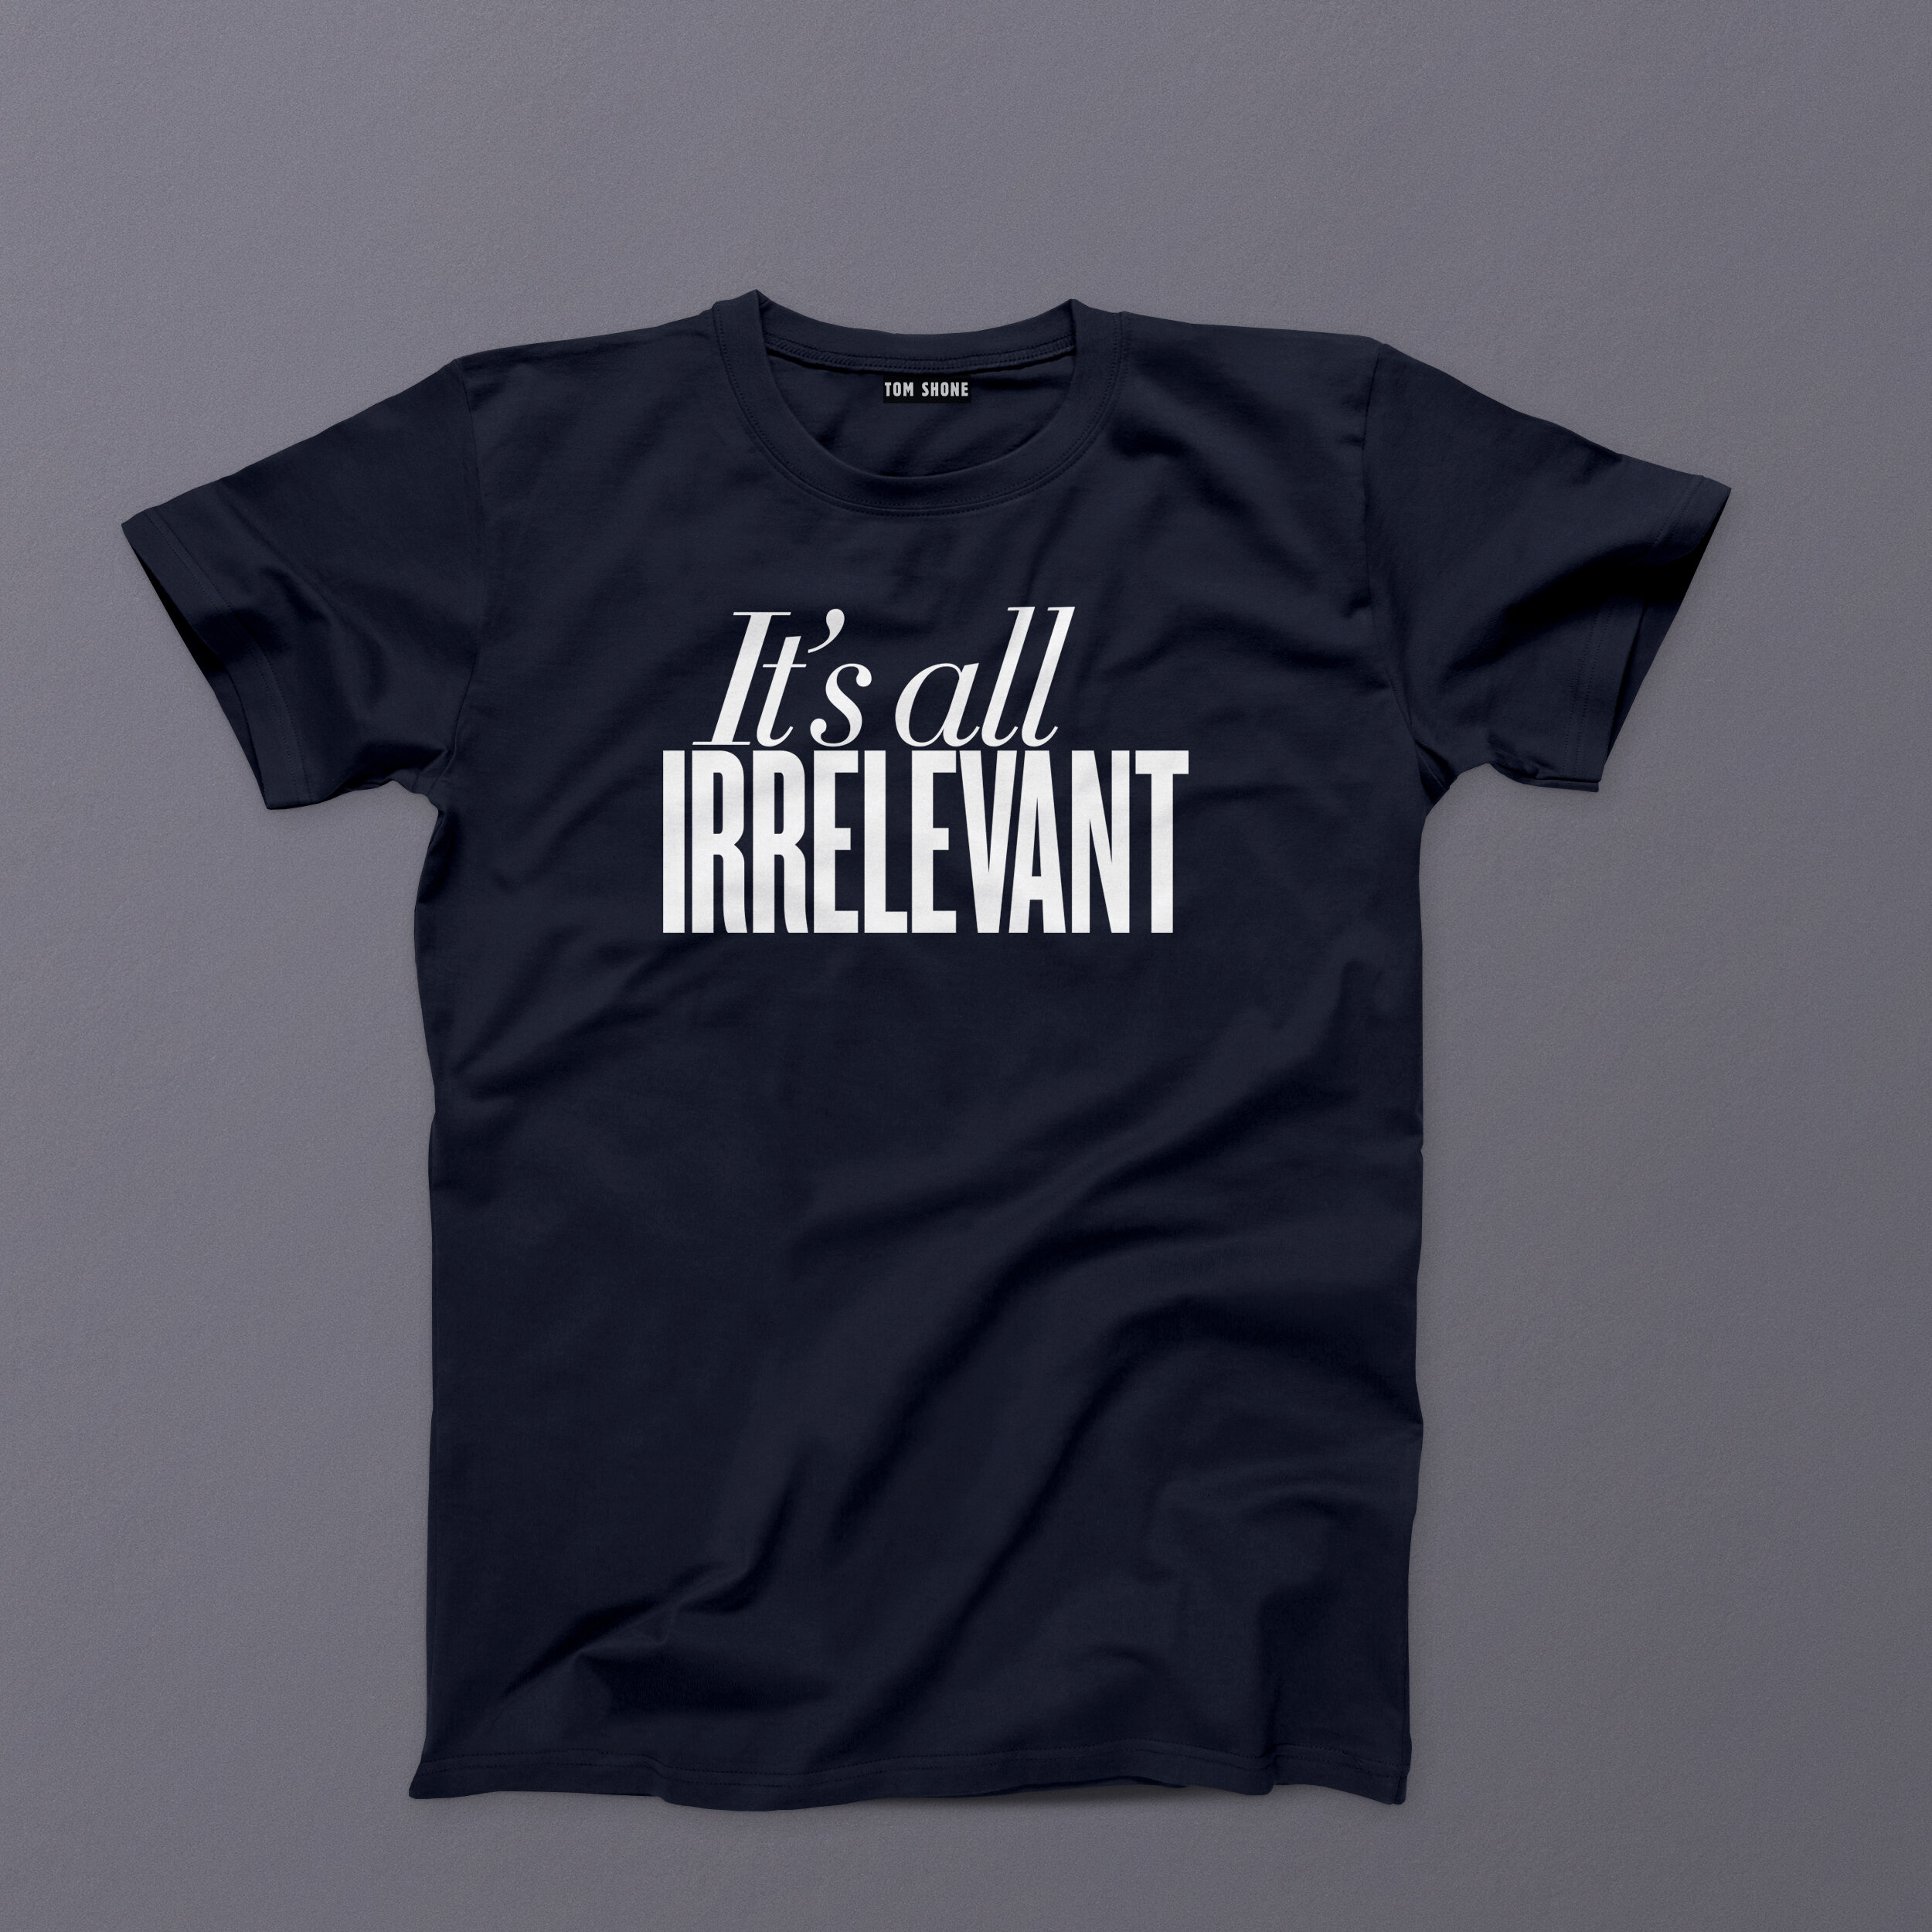 "It's all irrelevant" T-shirt